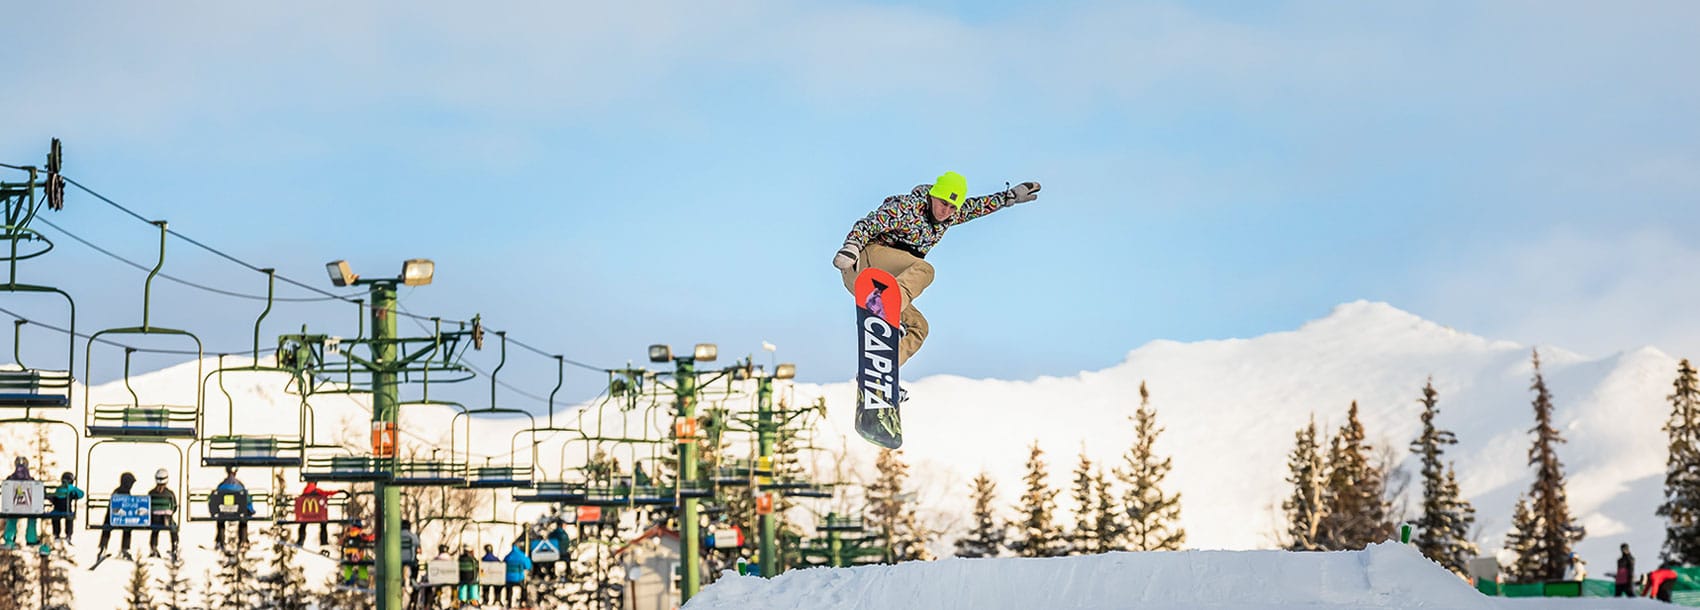 snowboarder jumpling